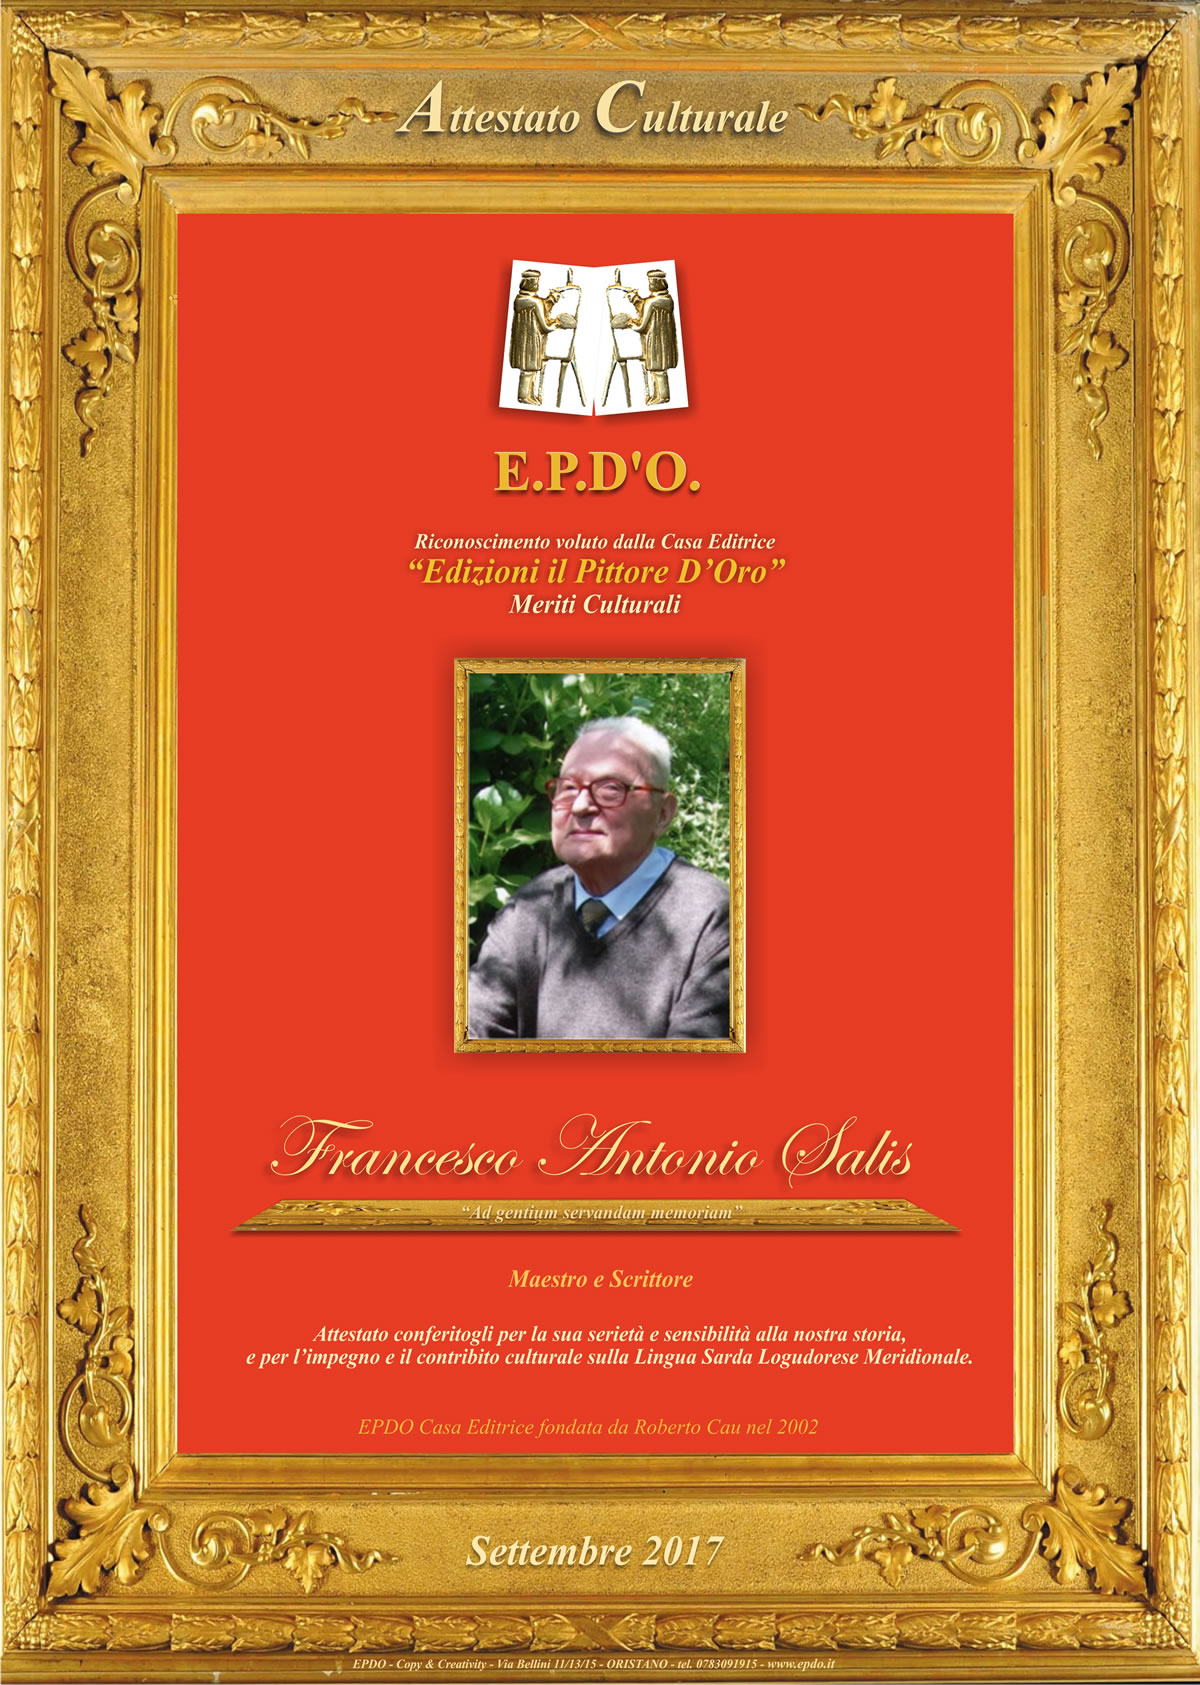 EPDO - Attestato Culturale Francesco Antonio Salis